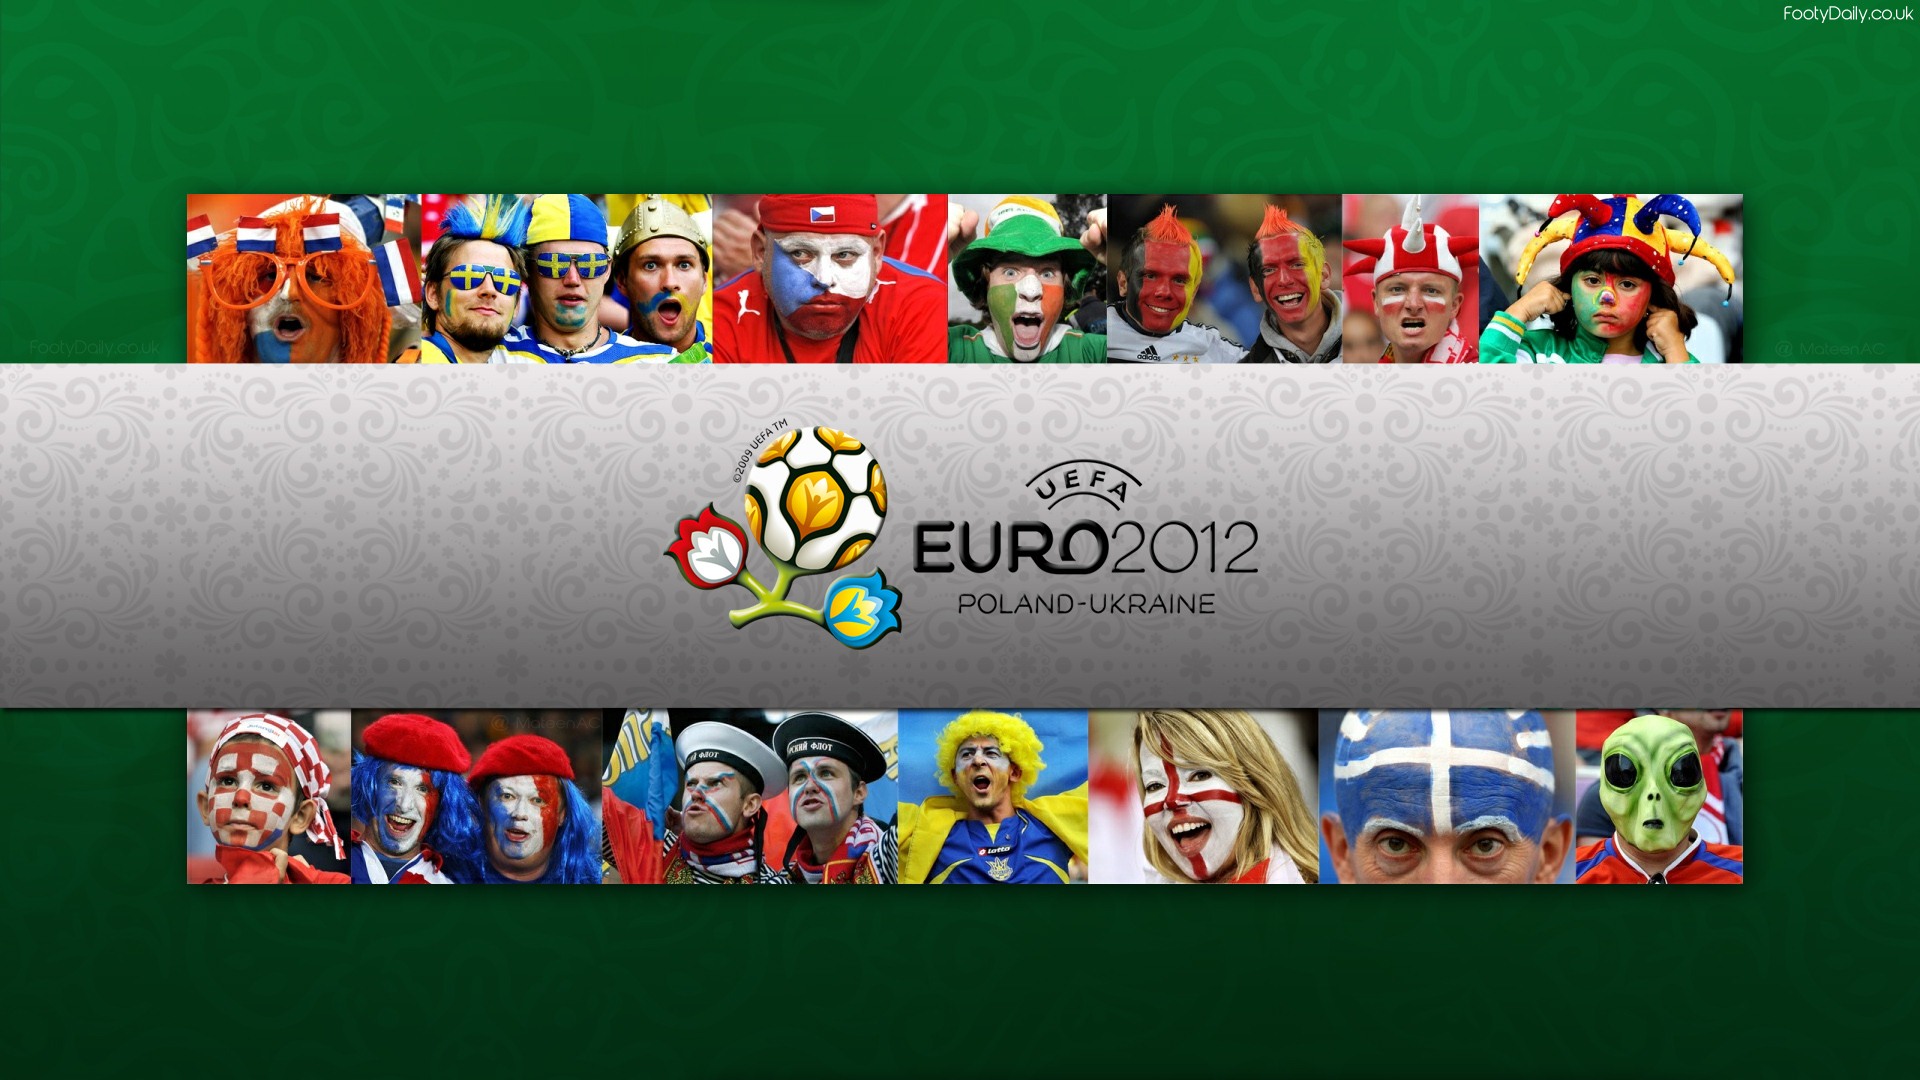 UEFA EURO 2012 欧洲足球锦标赛 高清壁纸(一)10 - 1920x1080